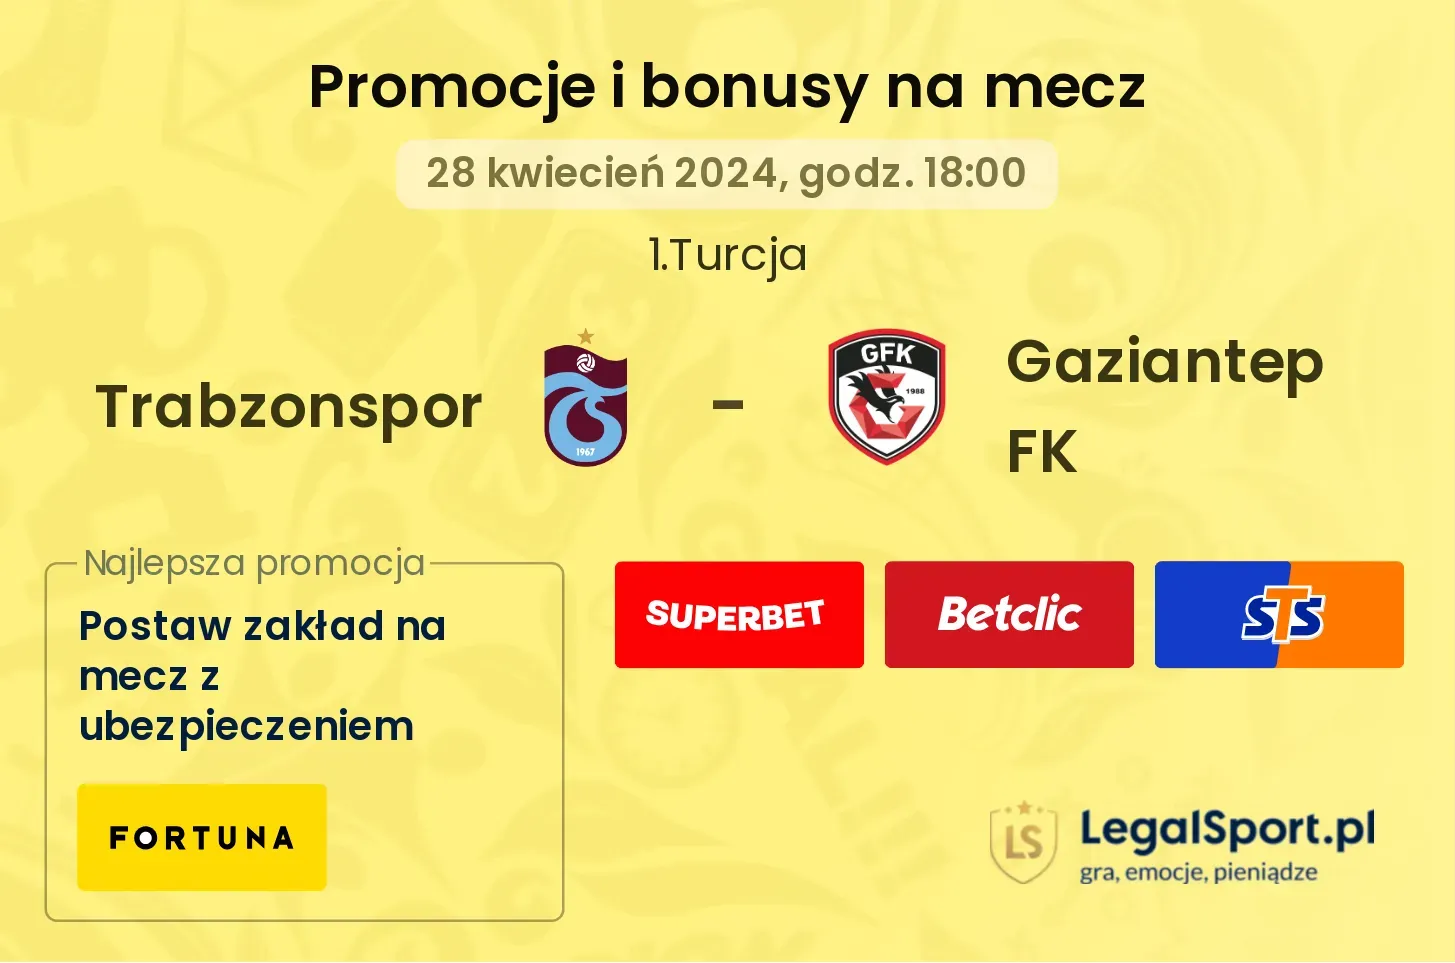 Trabzonspor - Gaziantep FK promocje bonusy na mecz